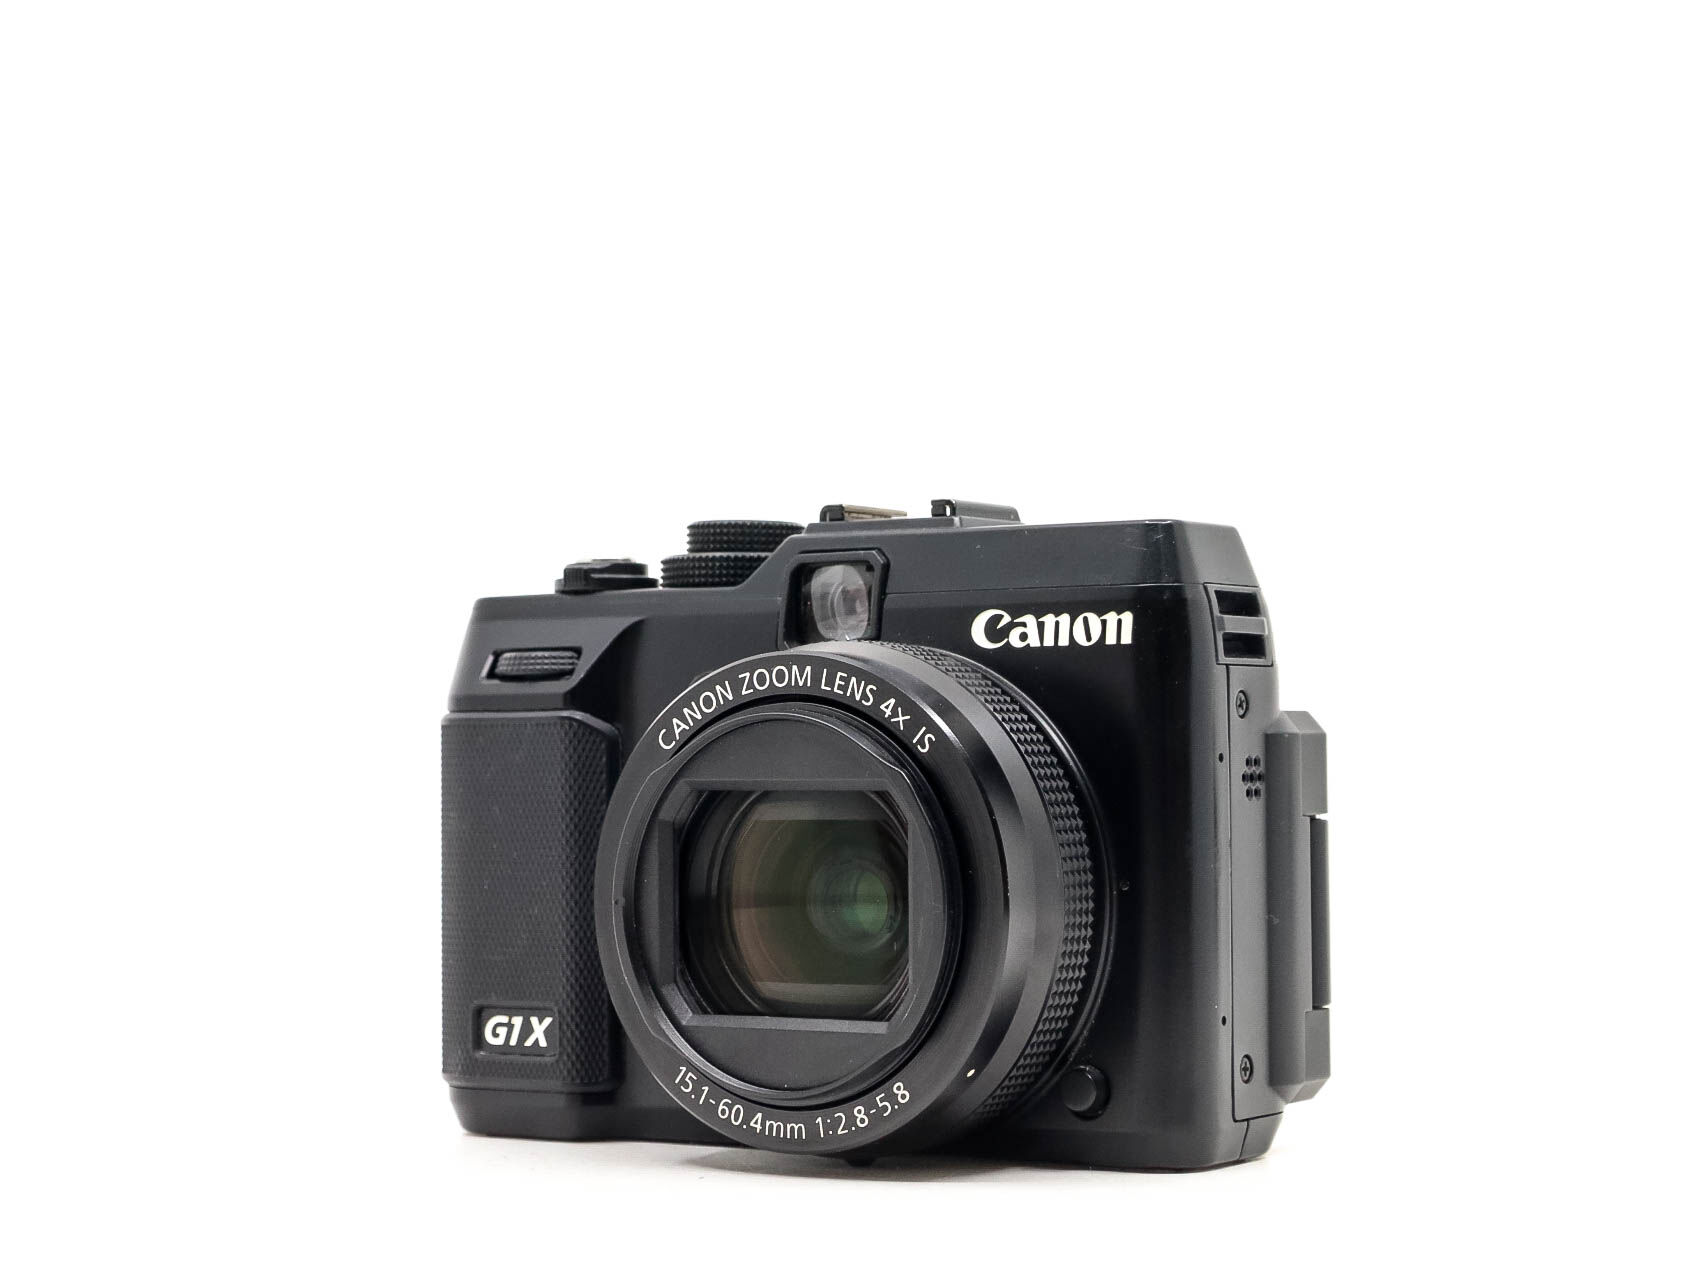 Canon PowerShot G1X (Condition: Excellent)